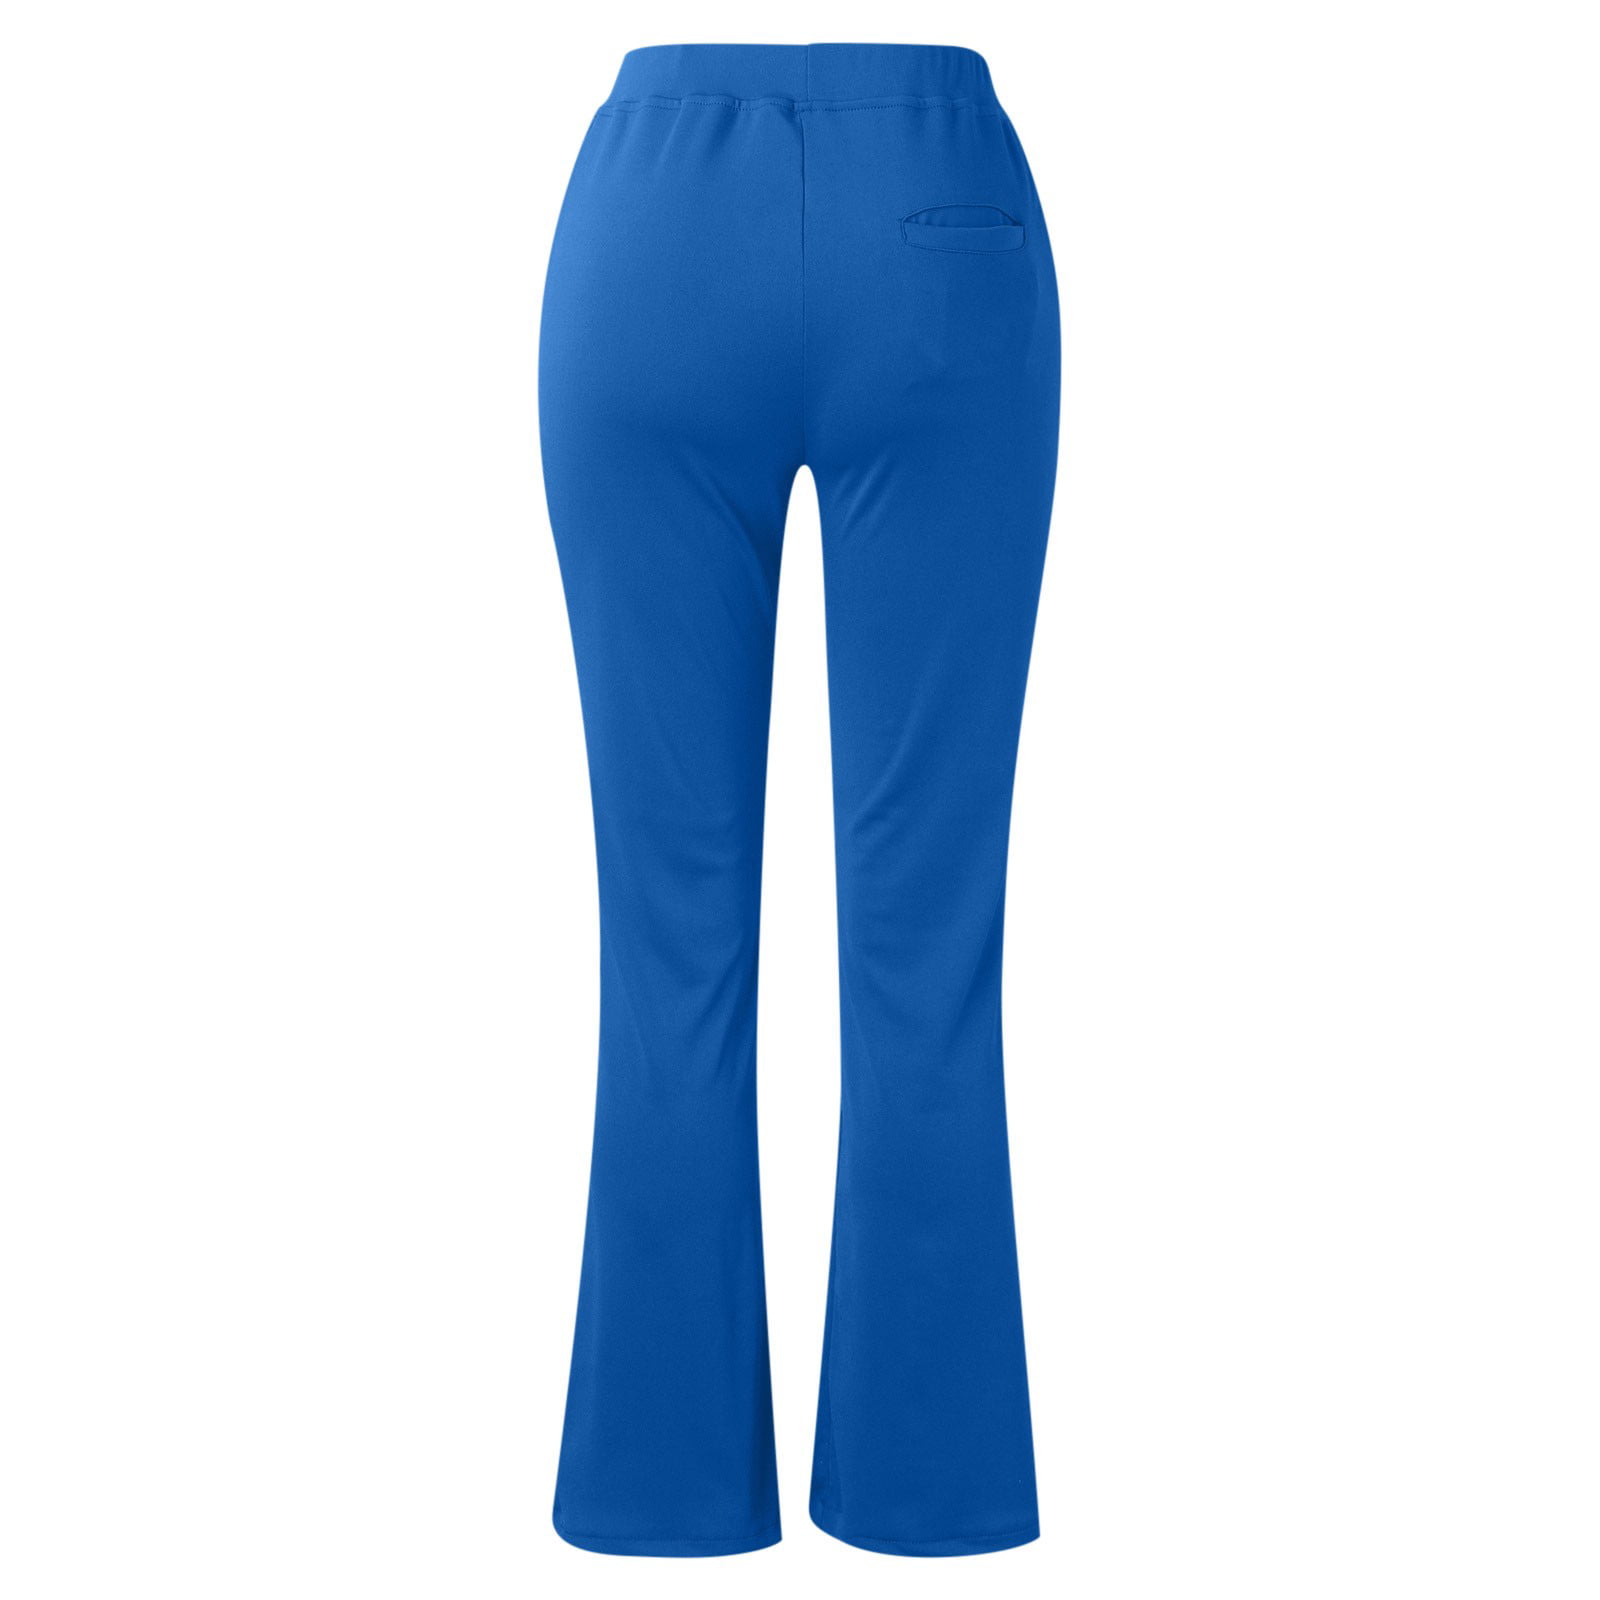  S-XXL 29313335 Inseam Womens Bootcut Dress Pants w/Pocket  Stretch Work Lounge Pant Office Casual Pants Blue